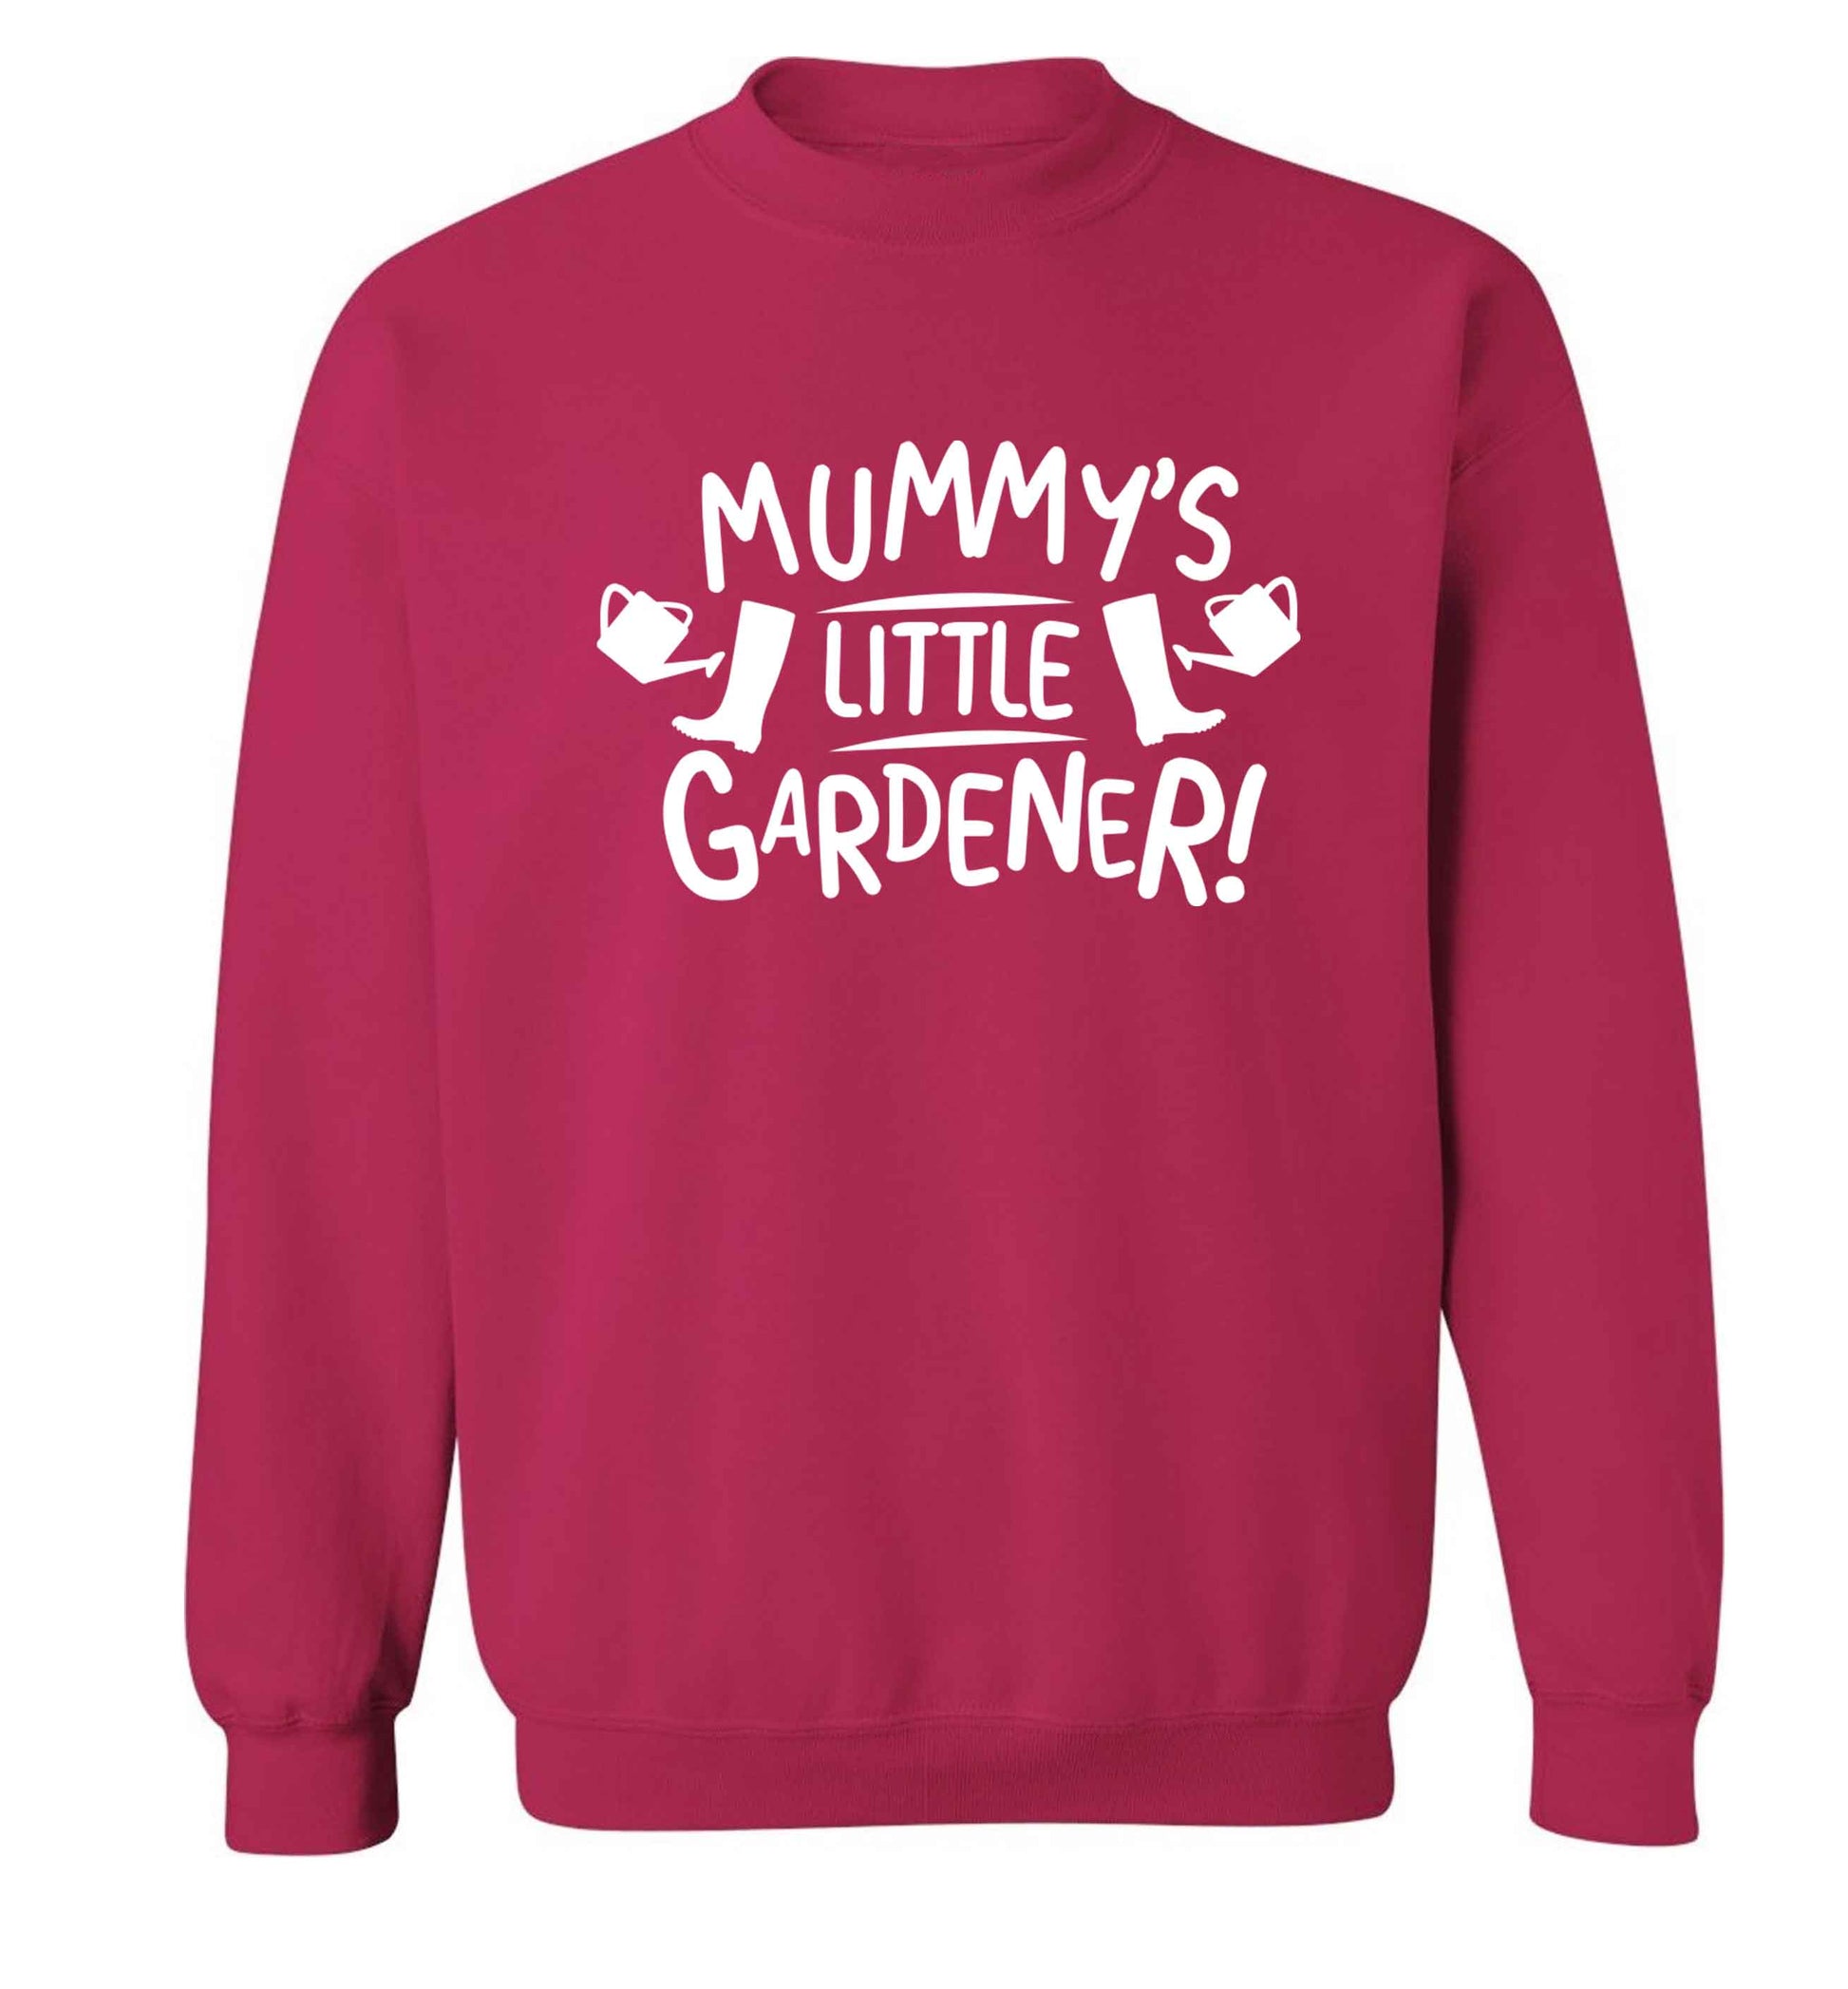 Mummy's little gardener Adult's unisex pink Sweater 2XL